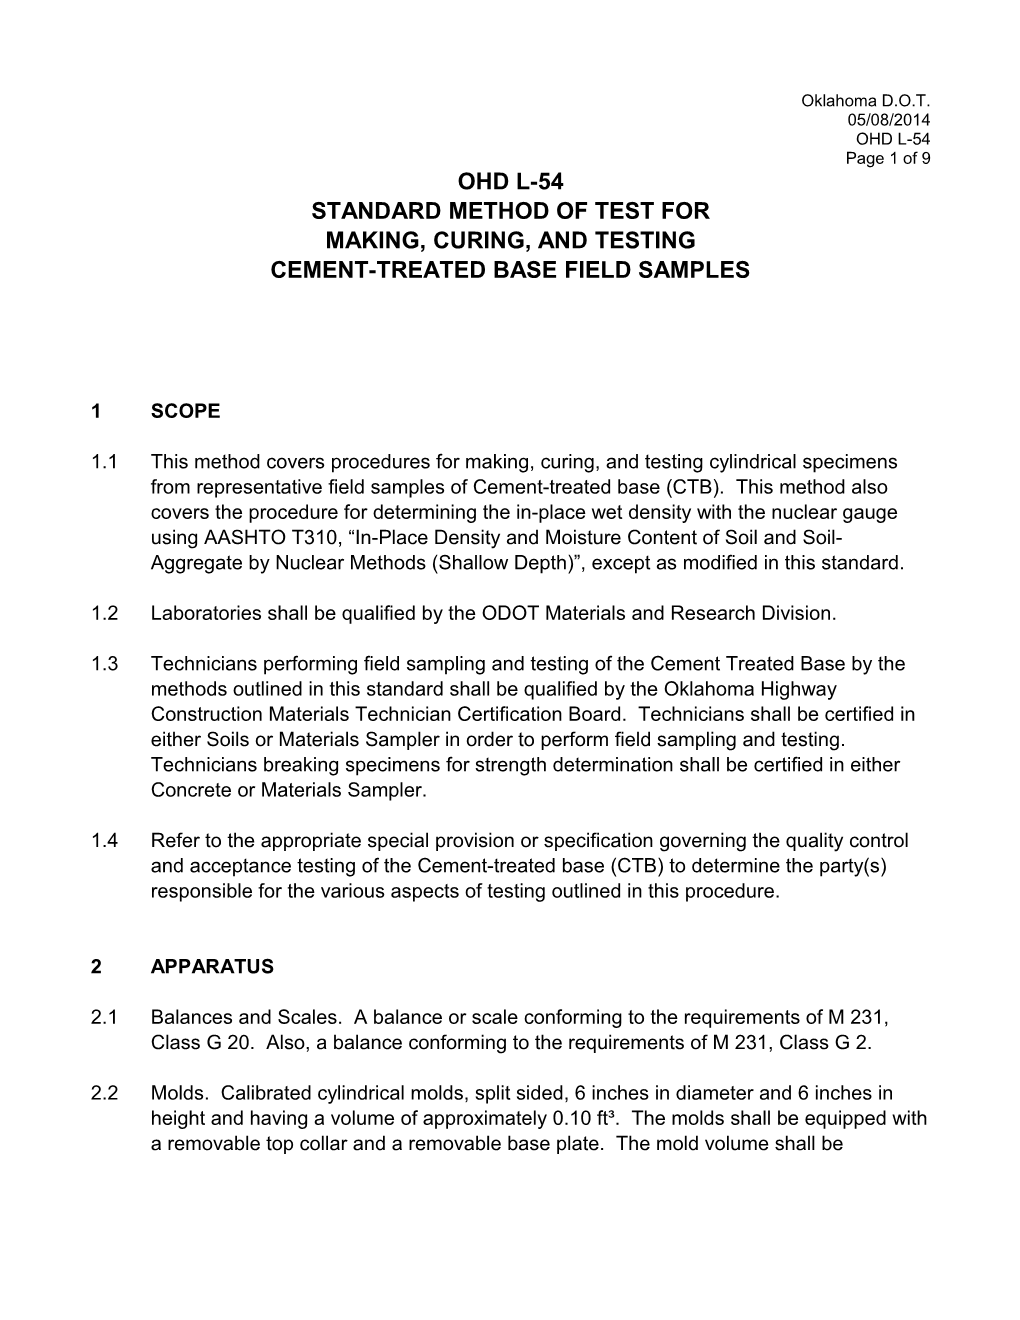 Standard Method of Test For